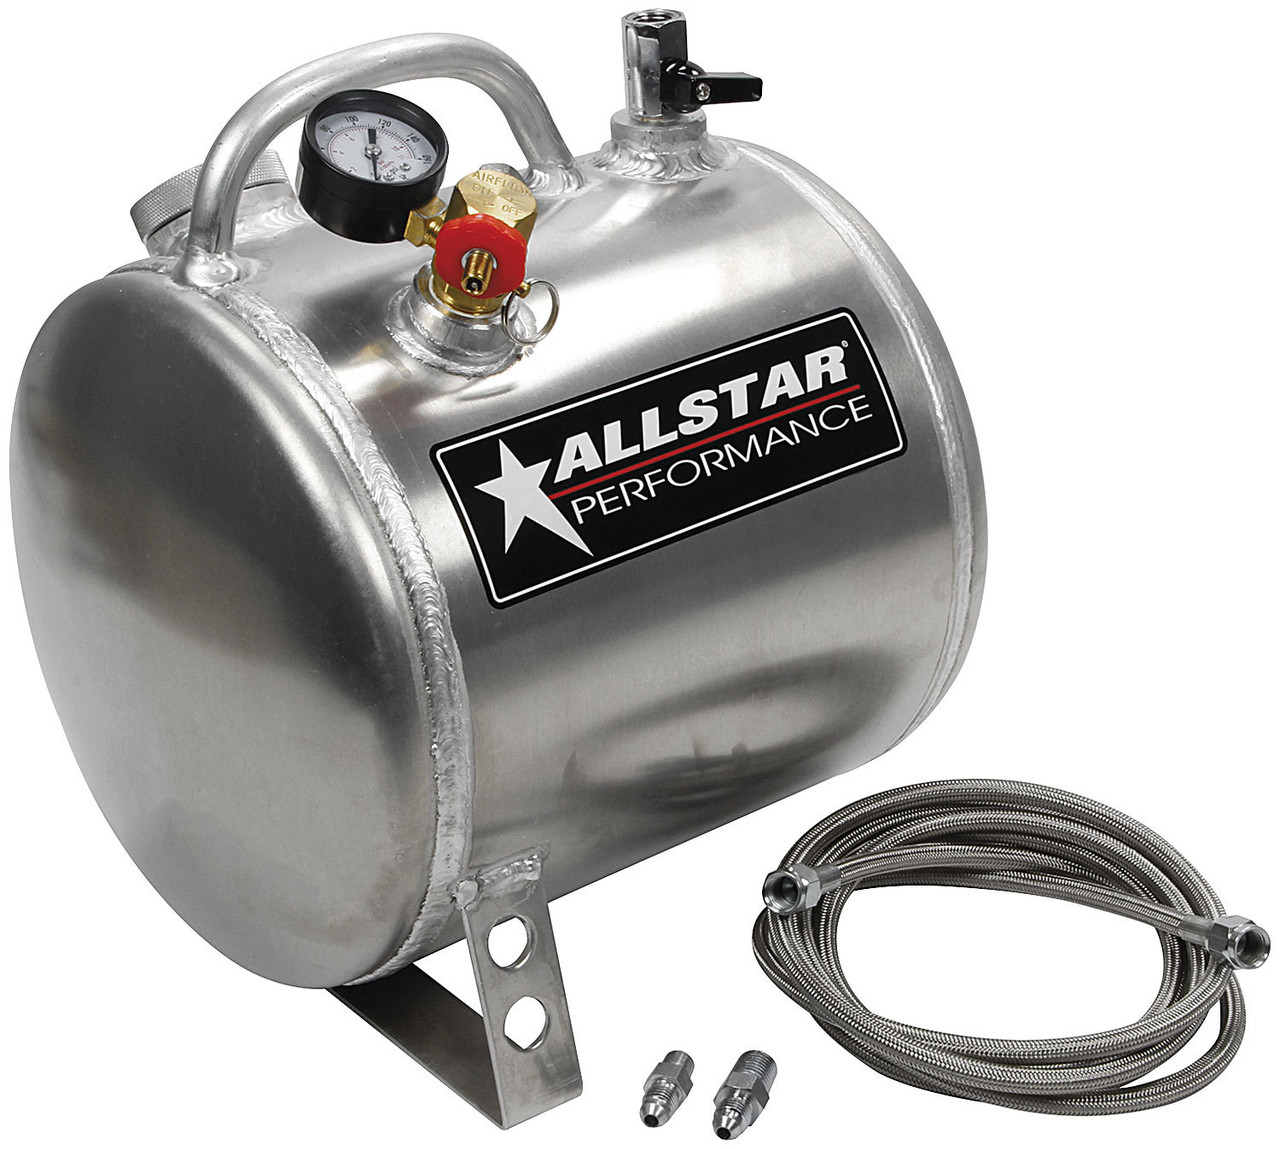 Allstar Performance Portable Oil Pump Primer